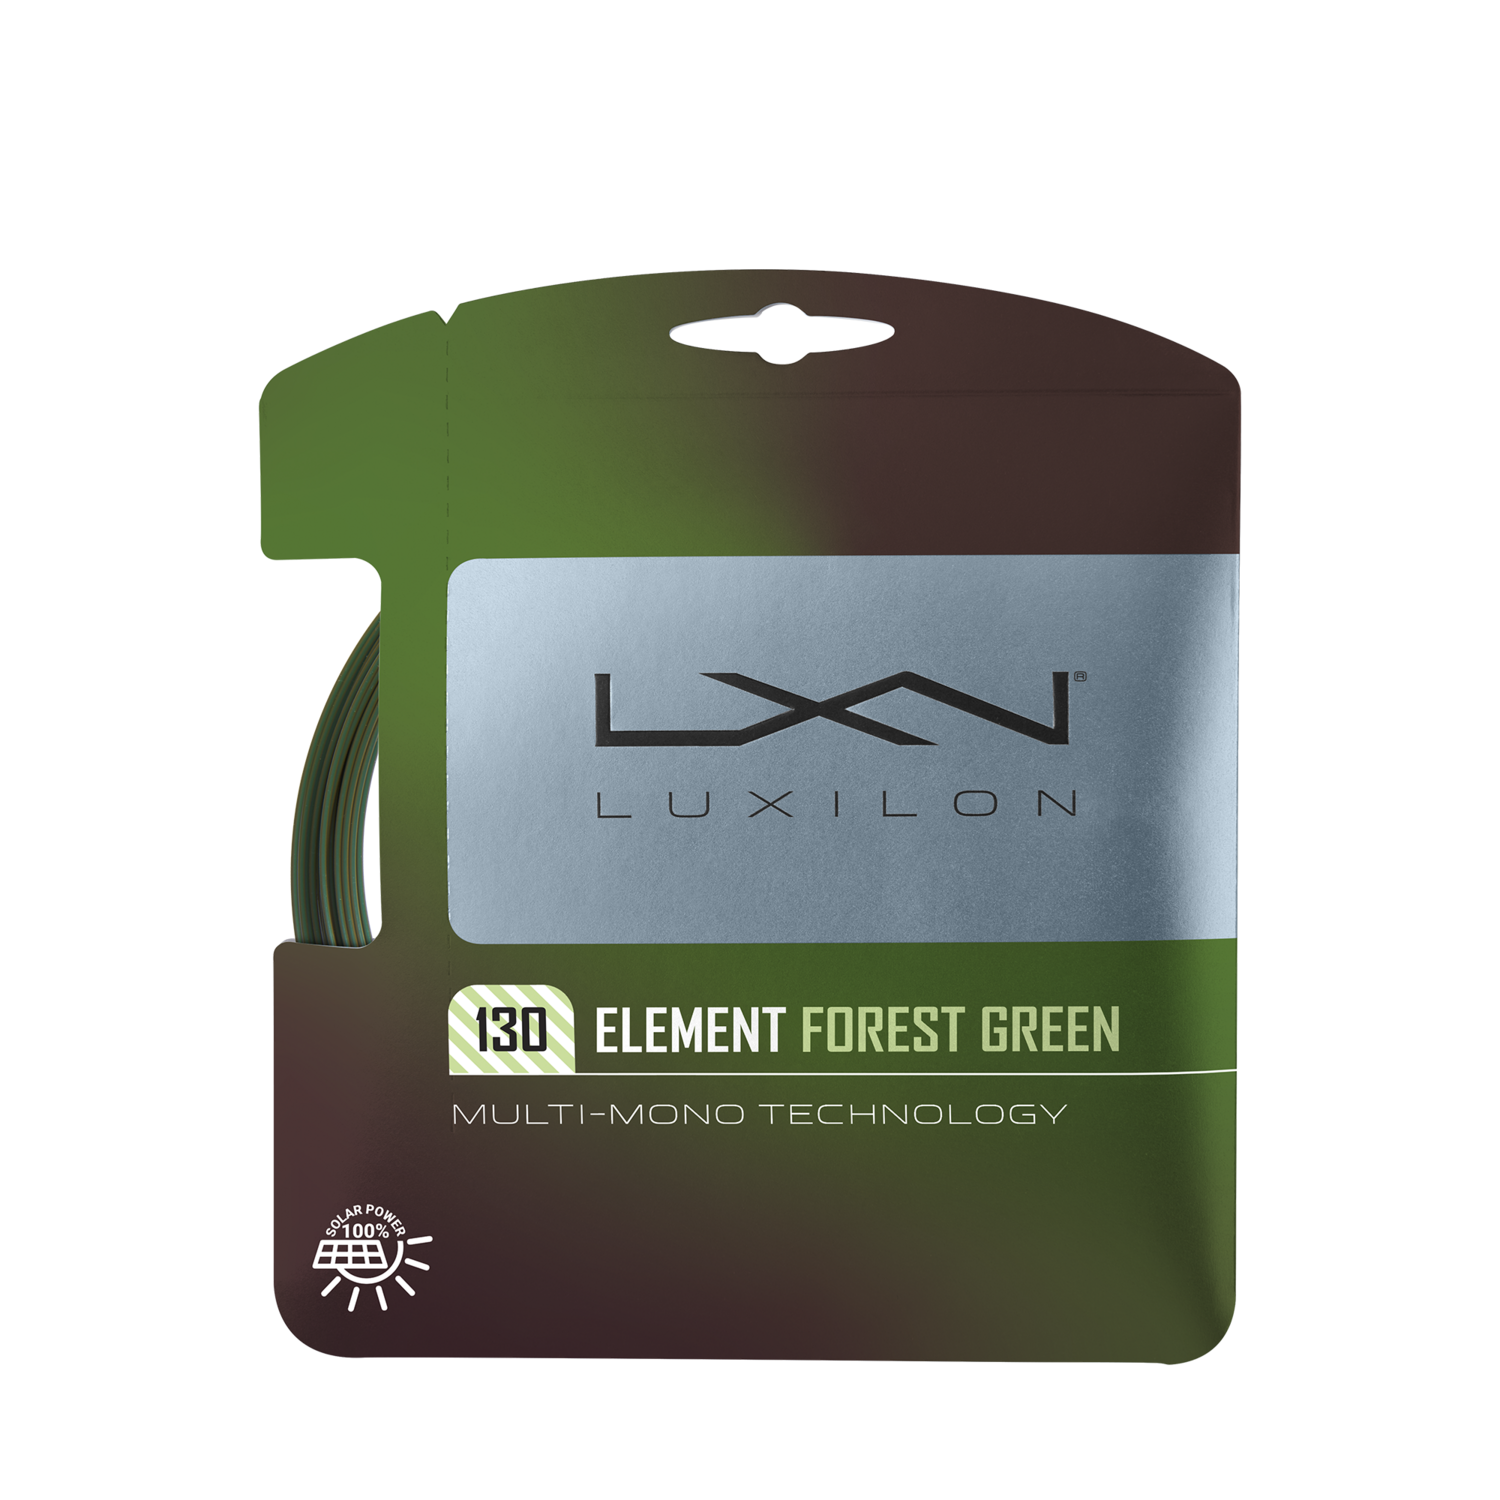 Luxilon Element 130 Forest Green Tennis String Set